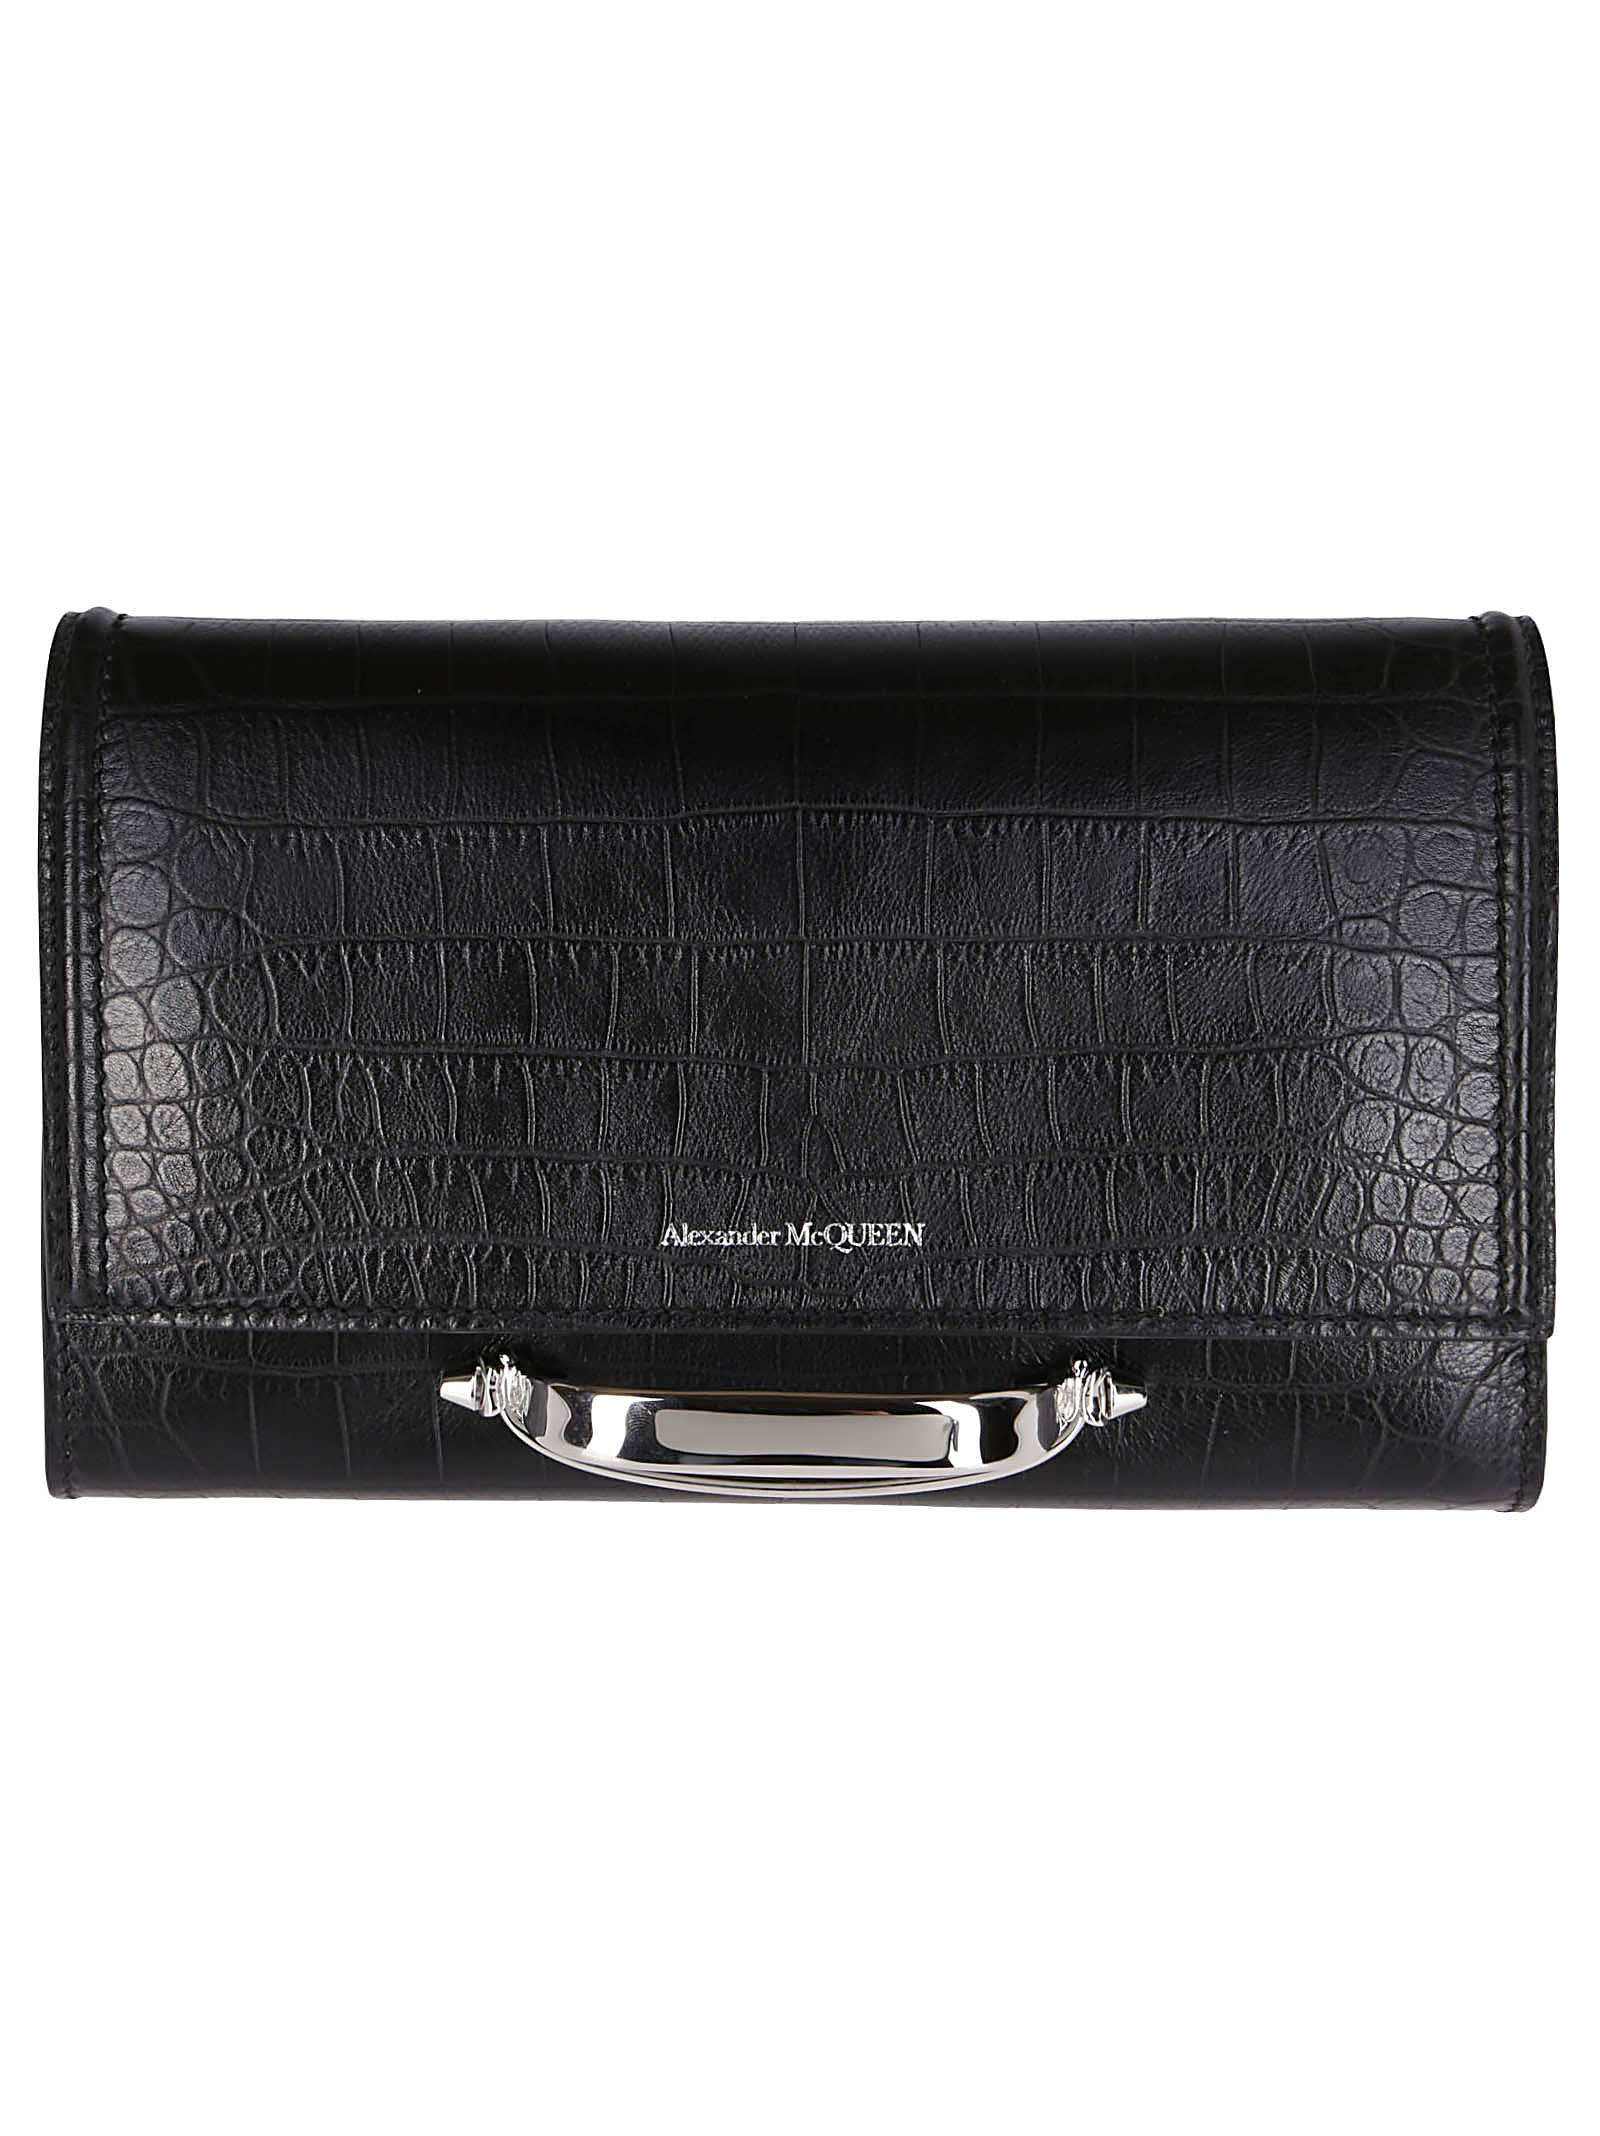 Alexander McQueen Black Leather Clutch Bag